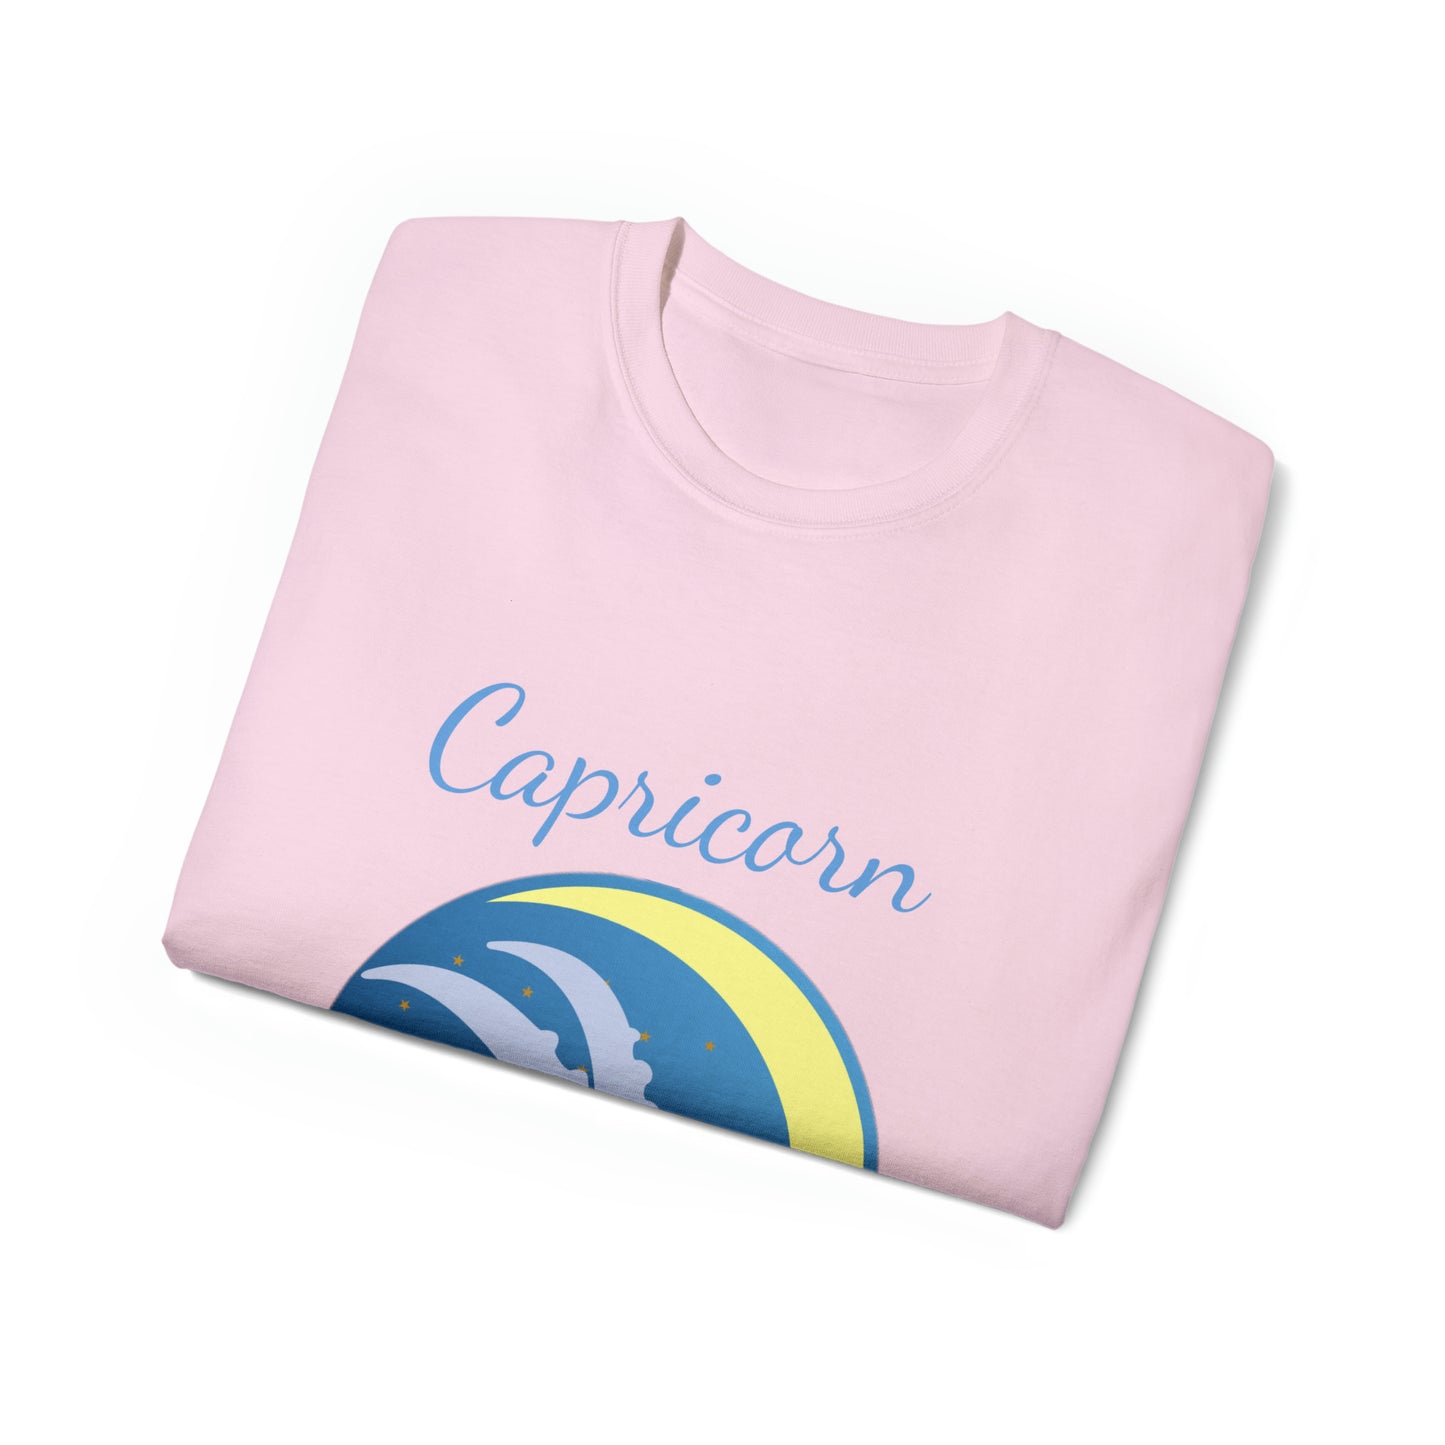 Capricorn Astrology 003 - Unisex Ultra Cotton Tee